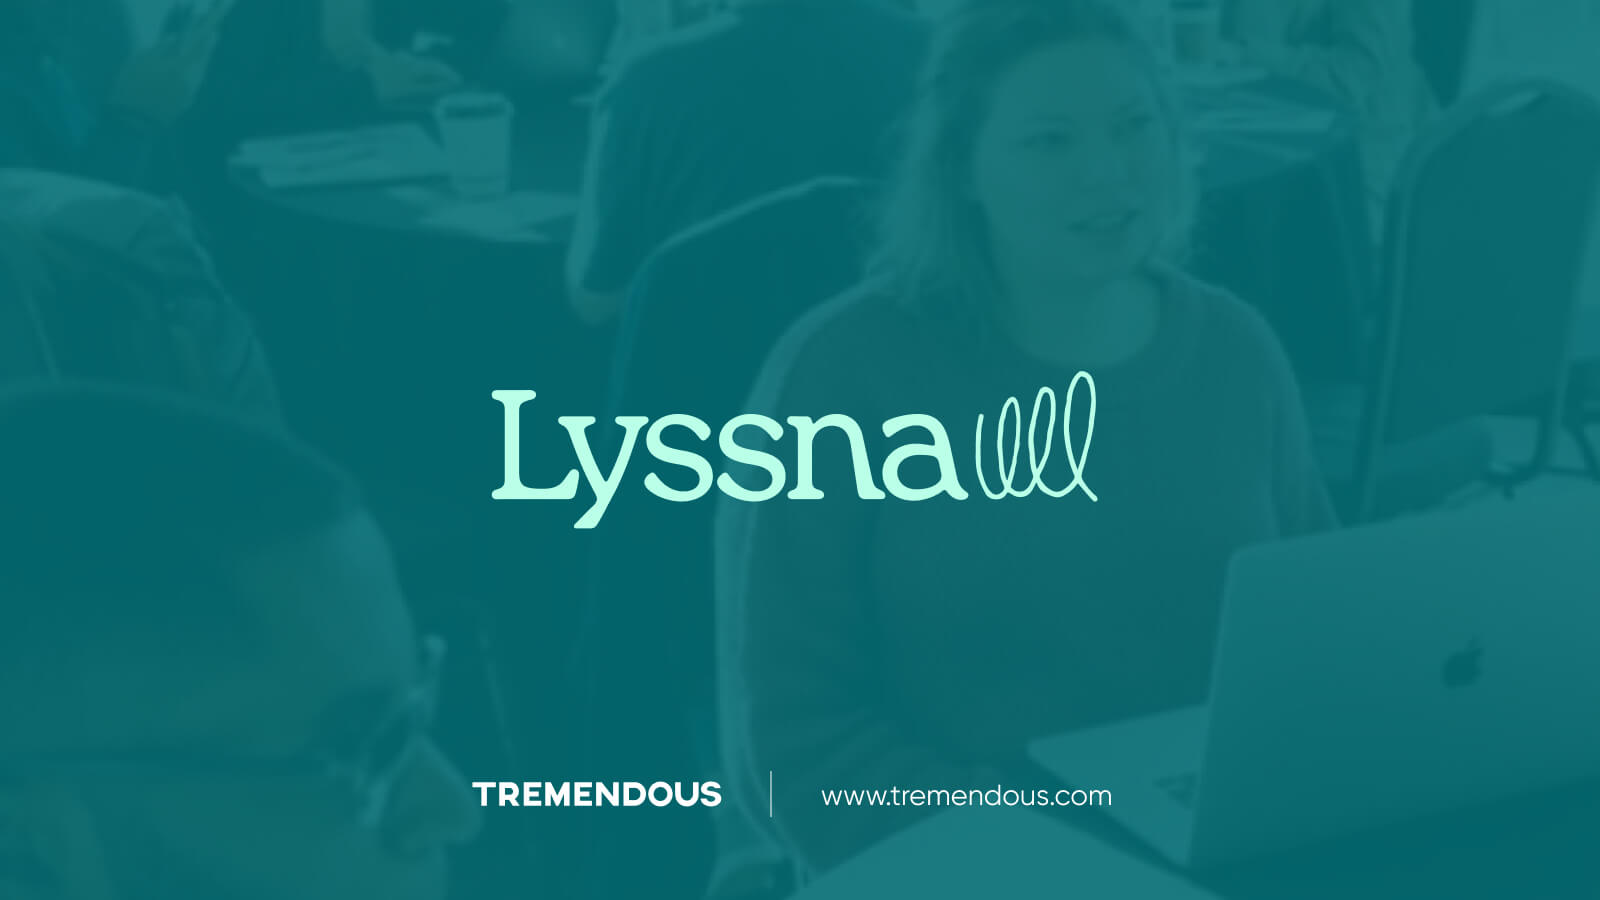 The Lyssna logo.